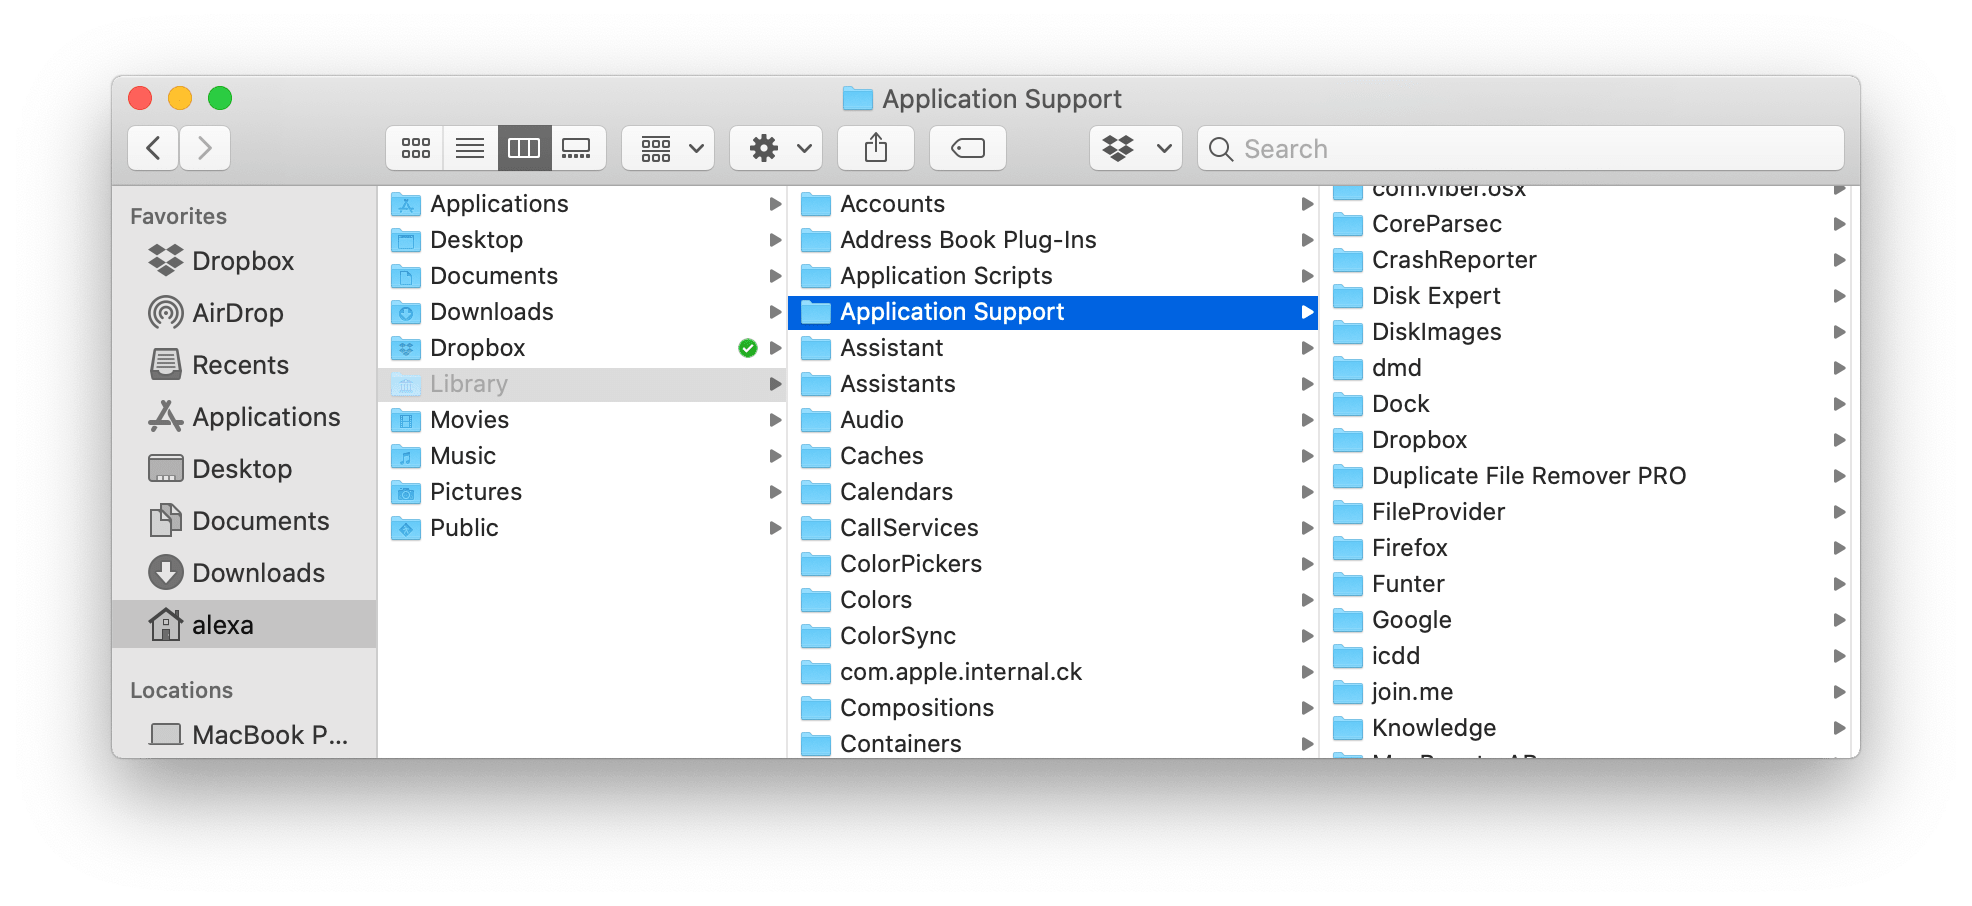 Content of Application Support folder in Finder